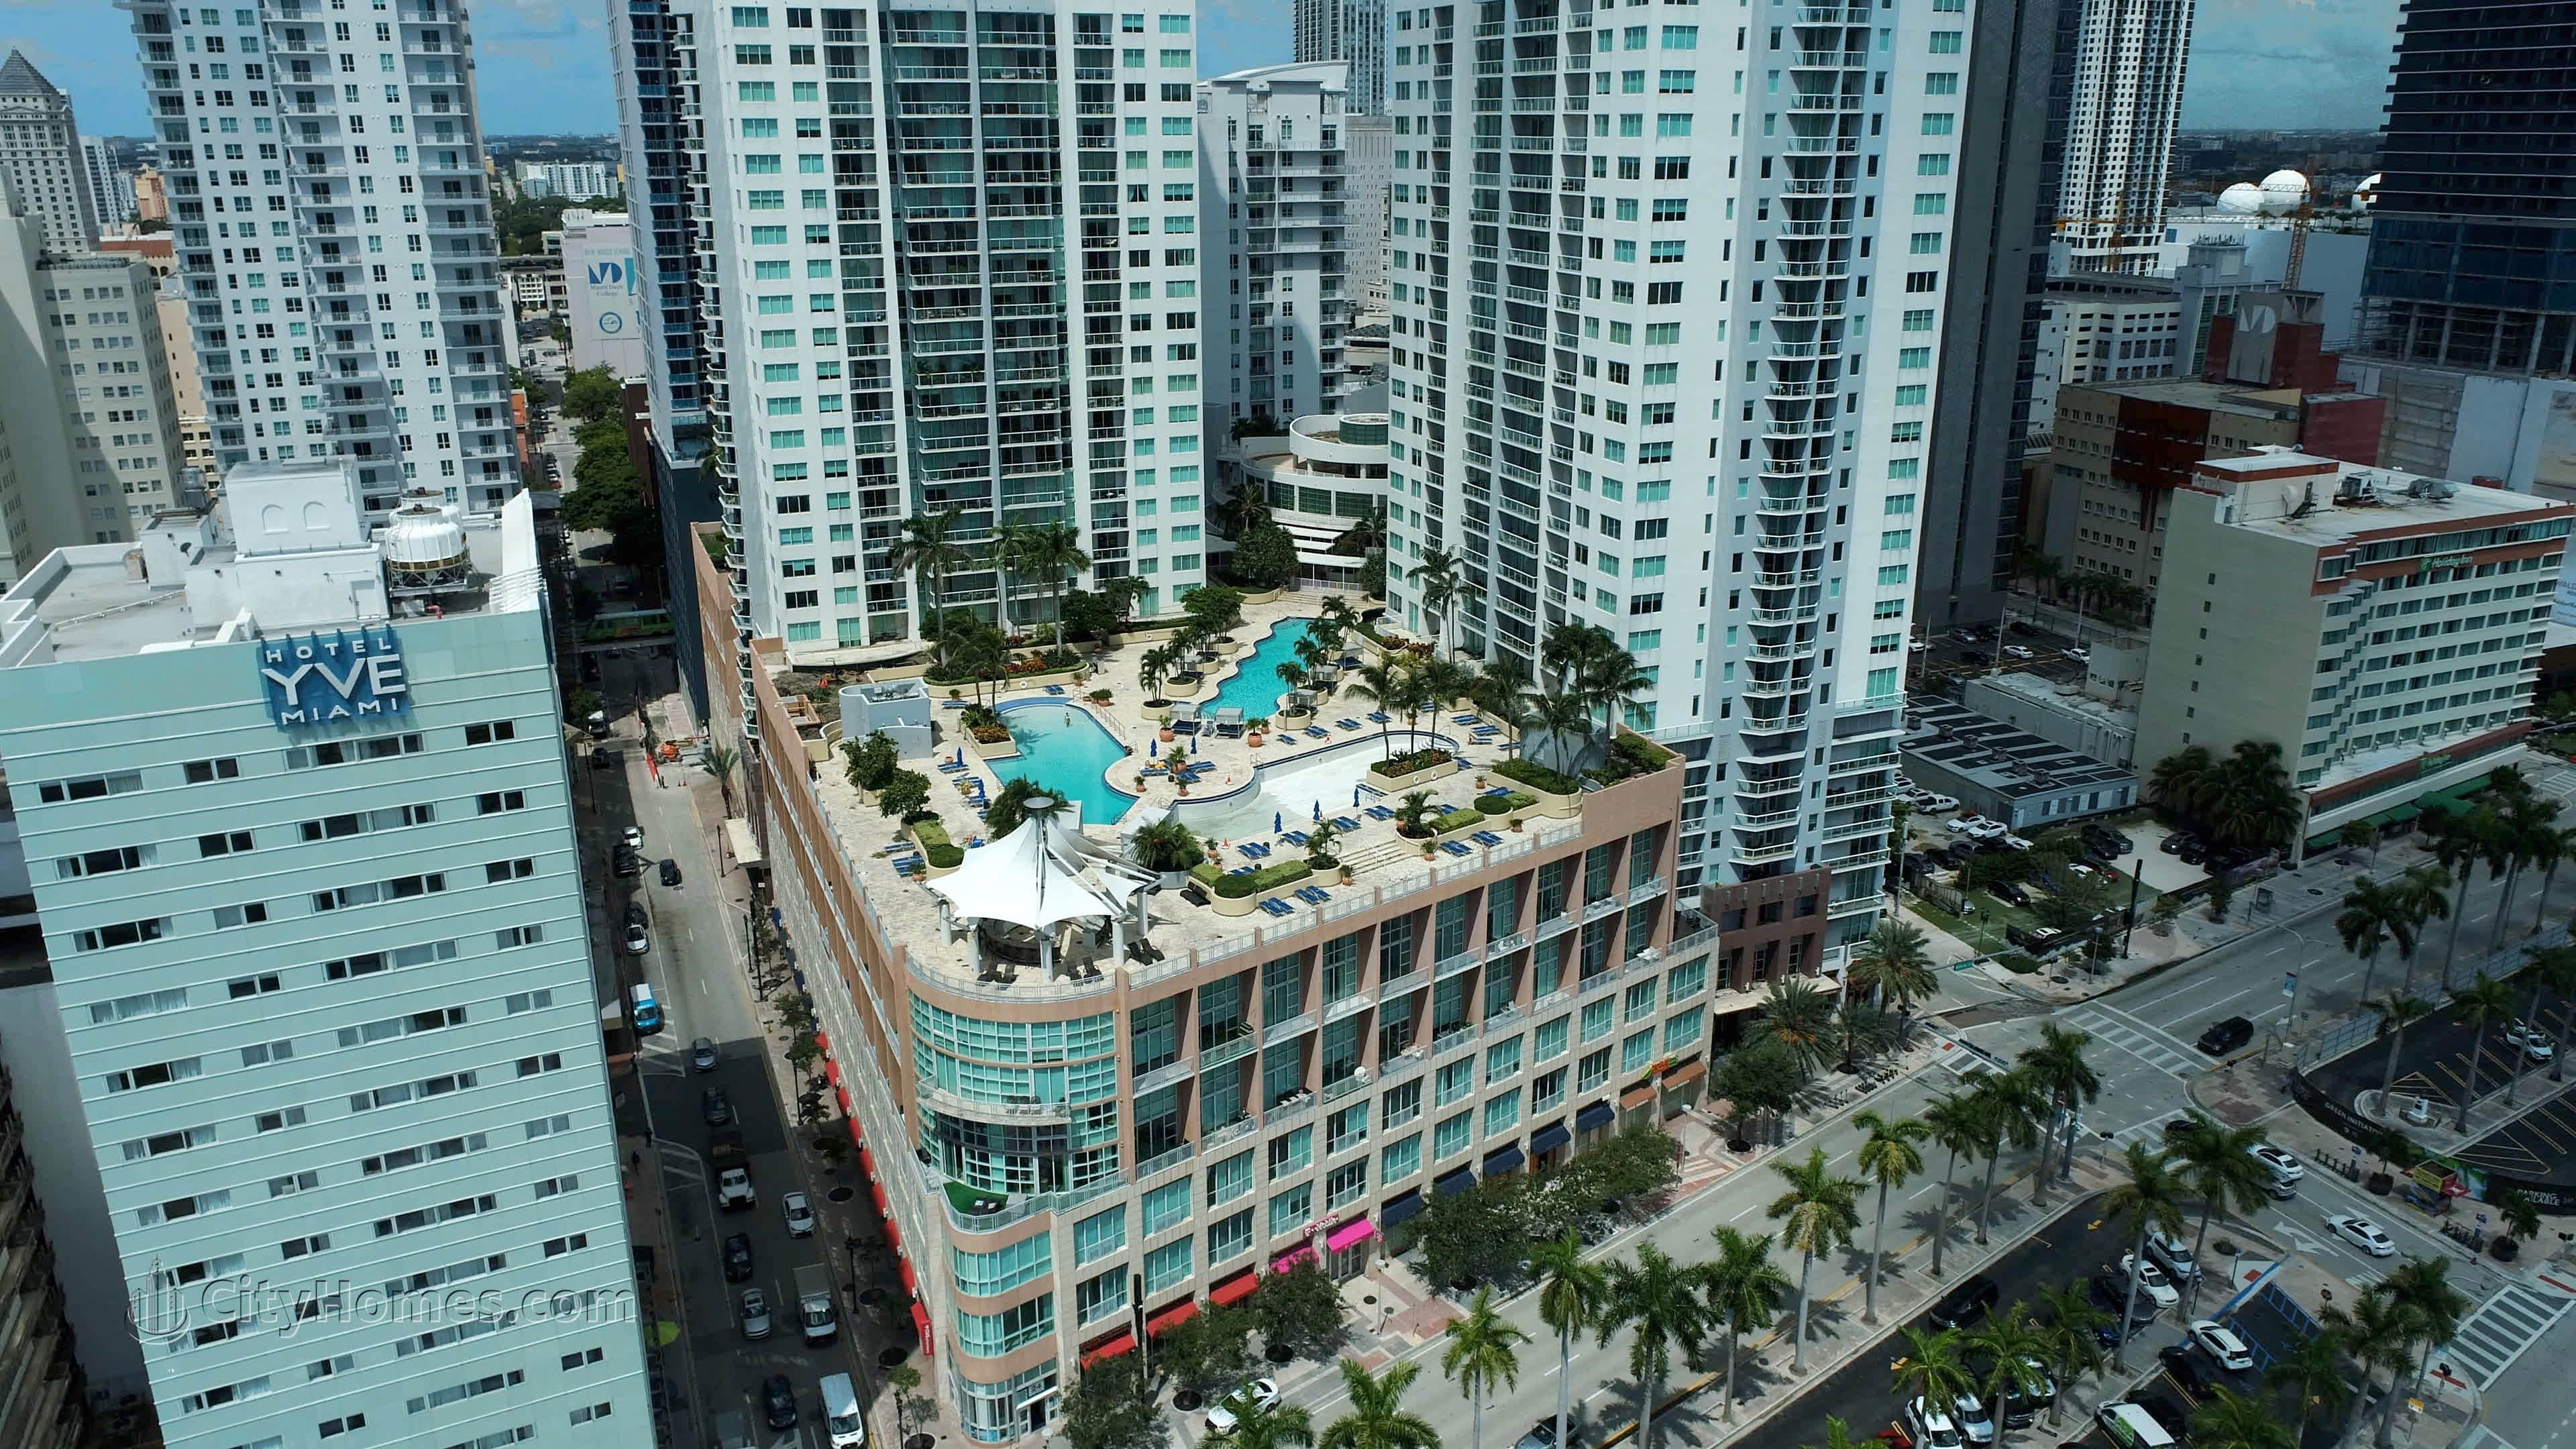 3. Vizcayne North building at 244 Biscayne Blvd, Downtown Miami, Miami, FL 33132